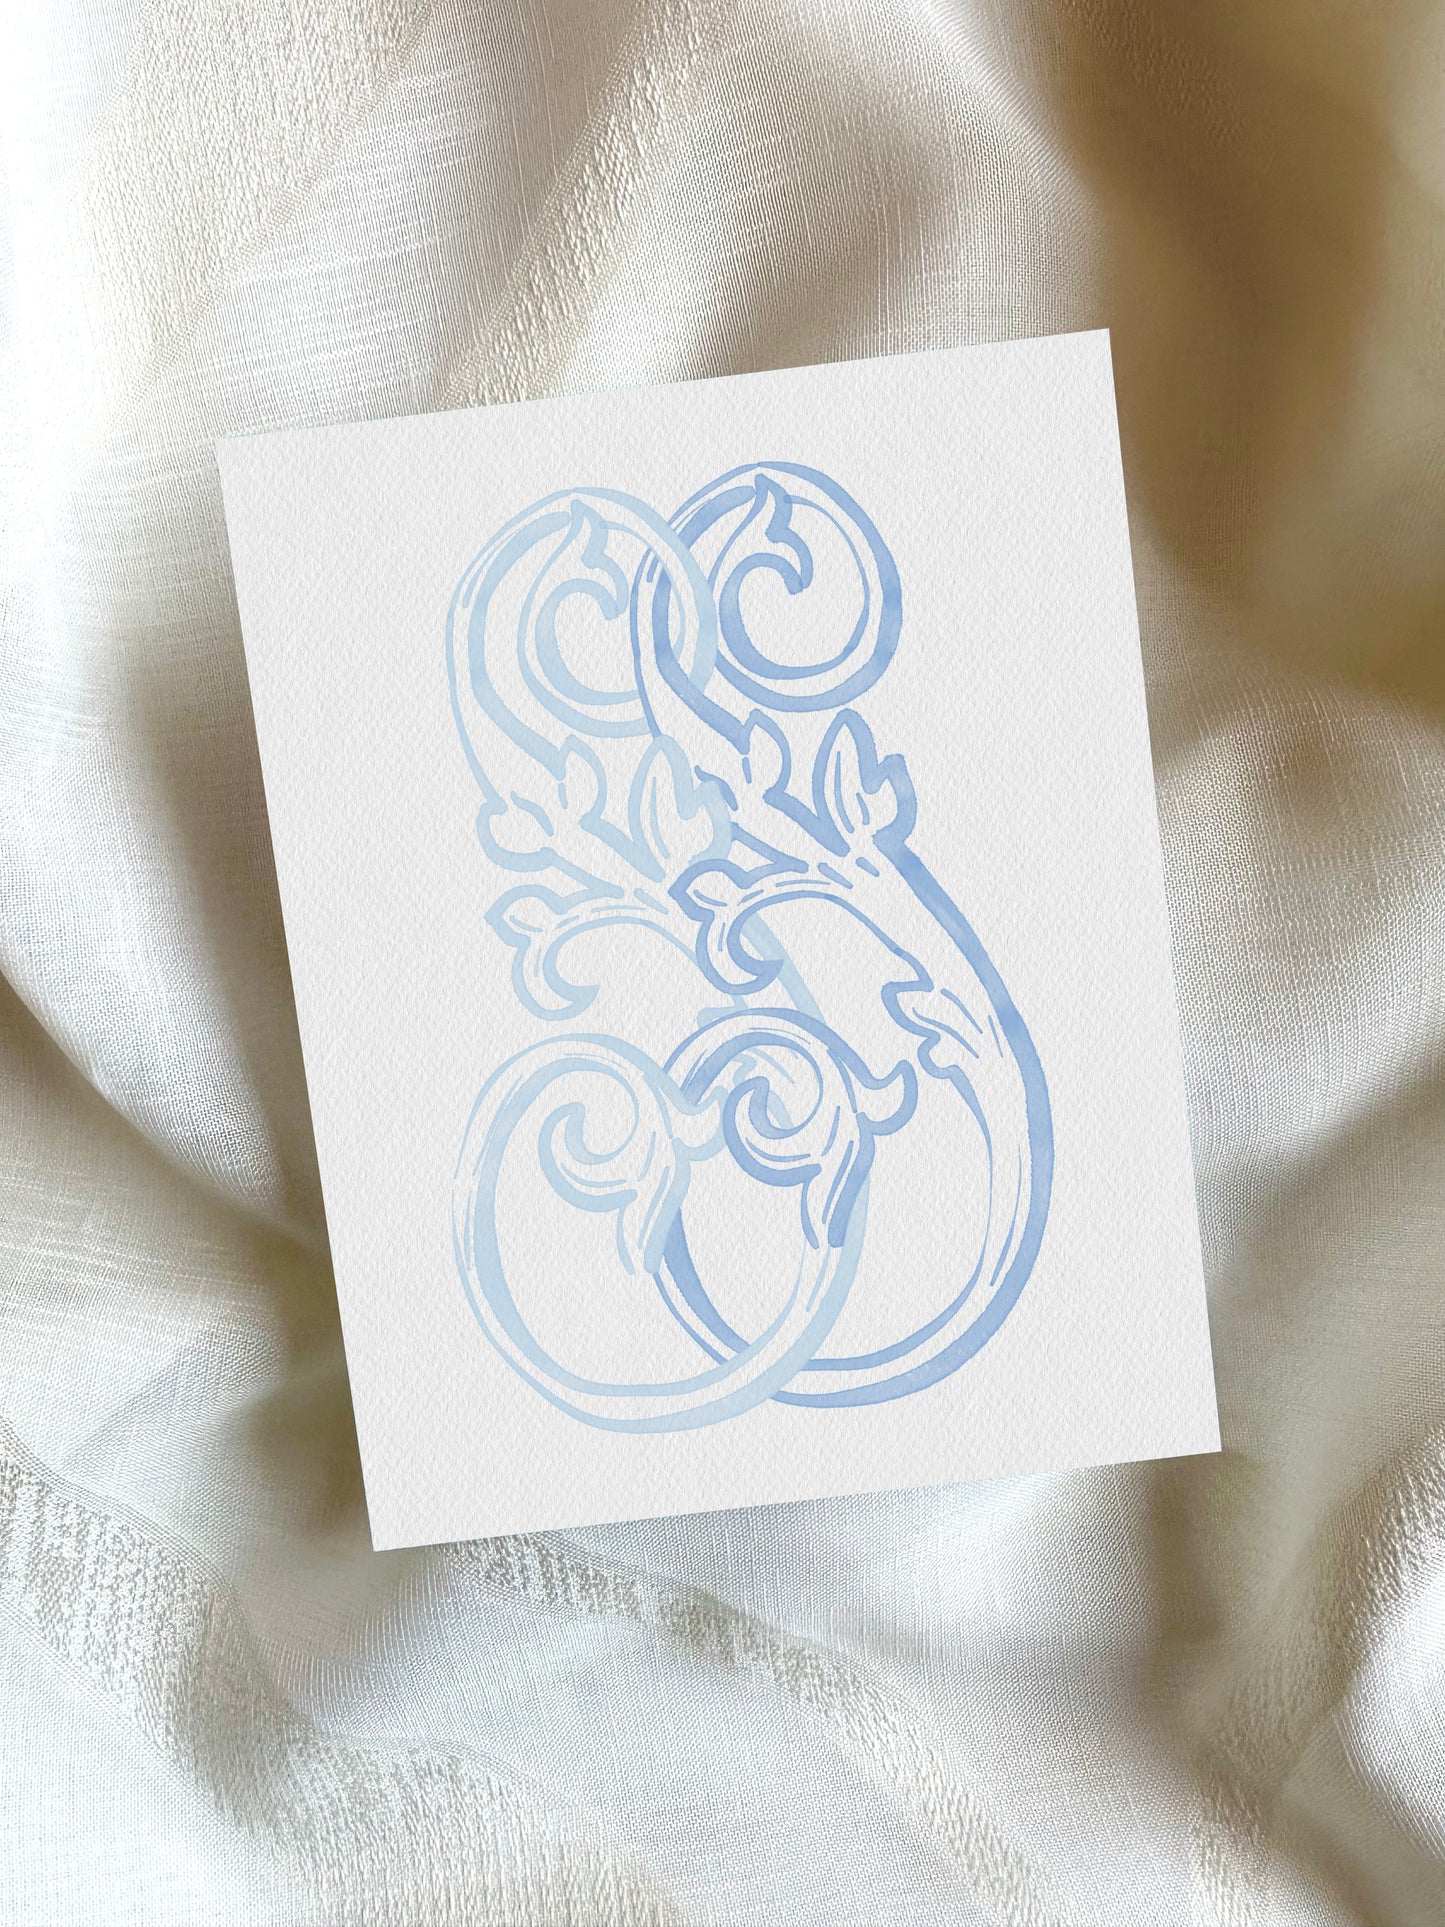 2 Letter Monogram with Letters SS | Digital Download - Wedding Monogram SVG, Personal Logo, Wedding Logo for Wedding Invitations The Wedding Crest Lab